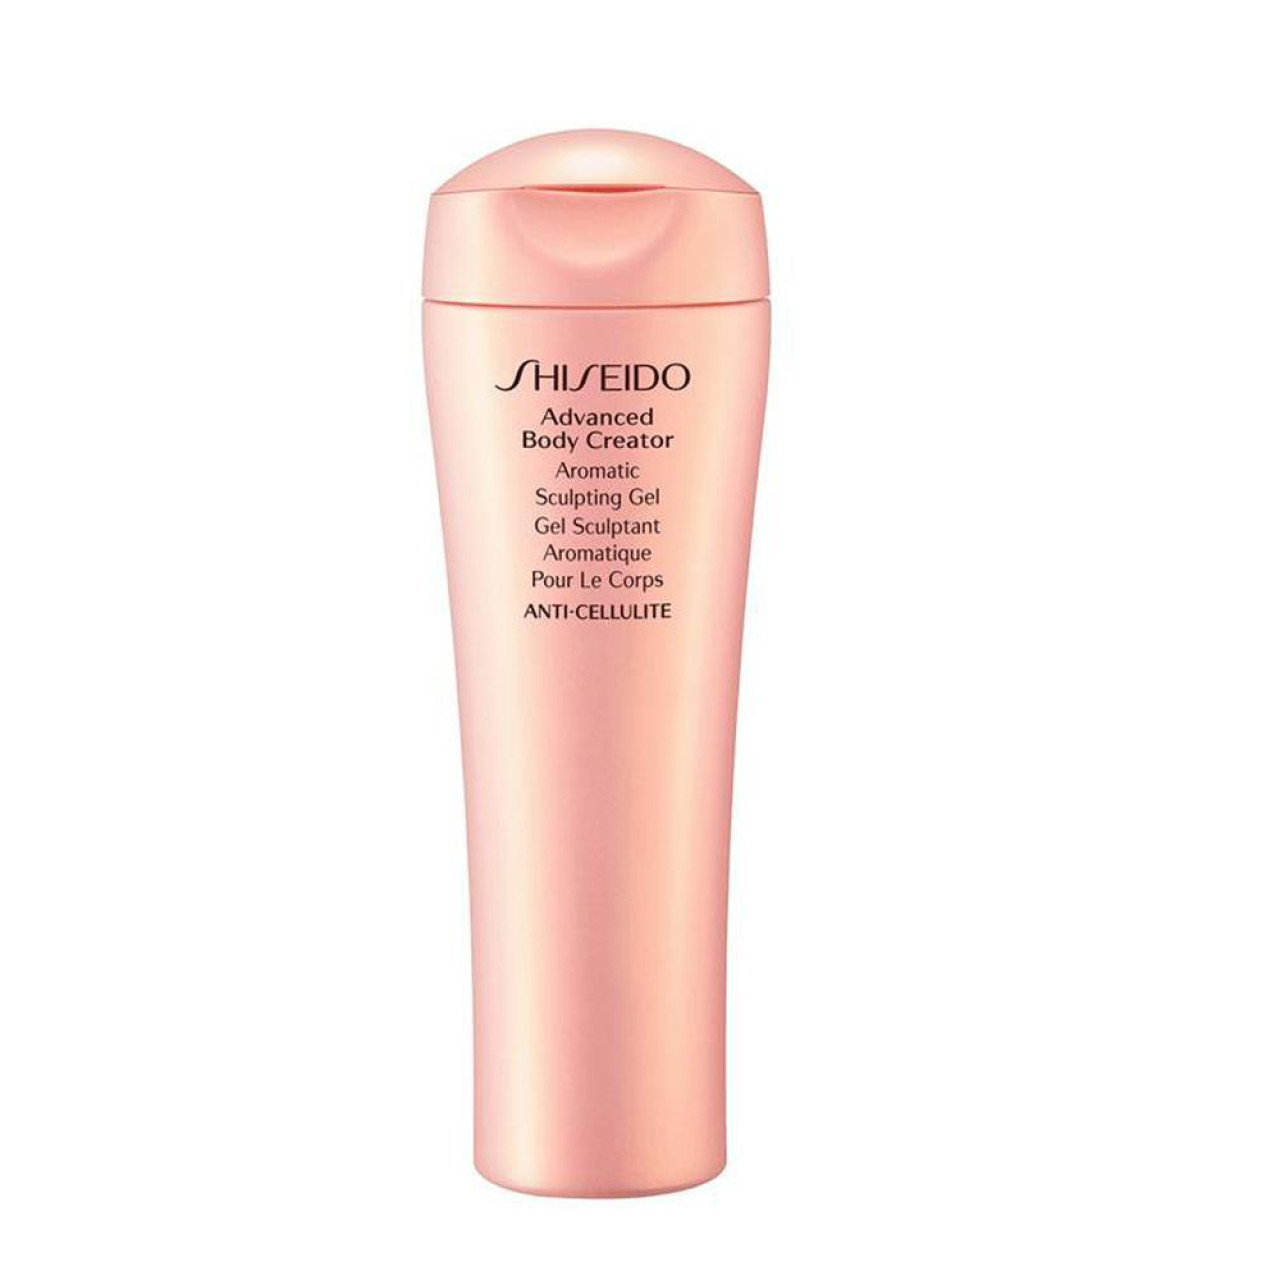 Shiseido body creator aromatic sculp gel